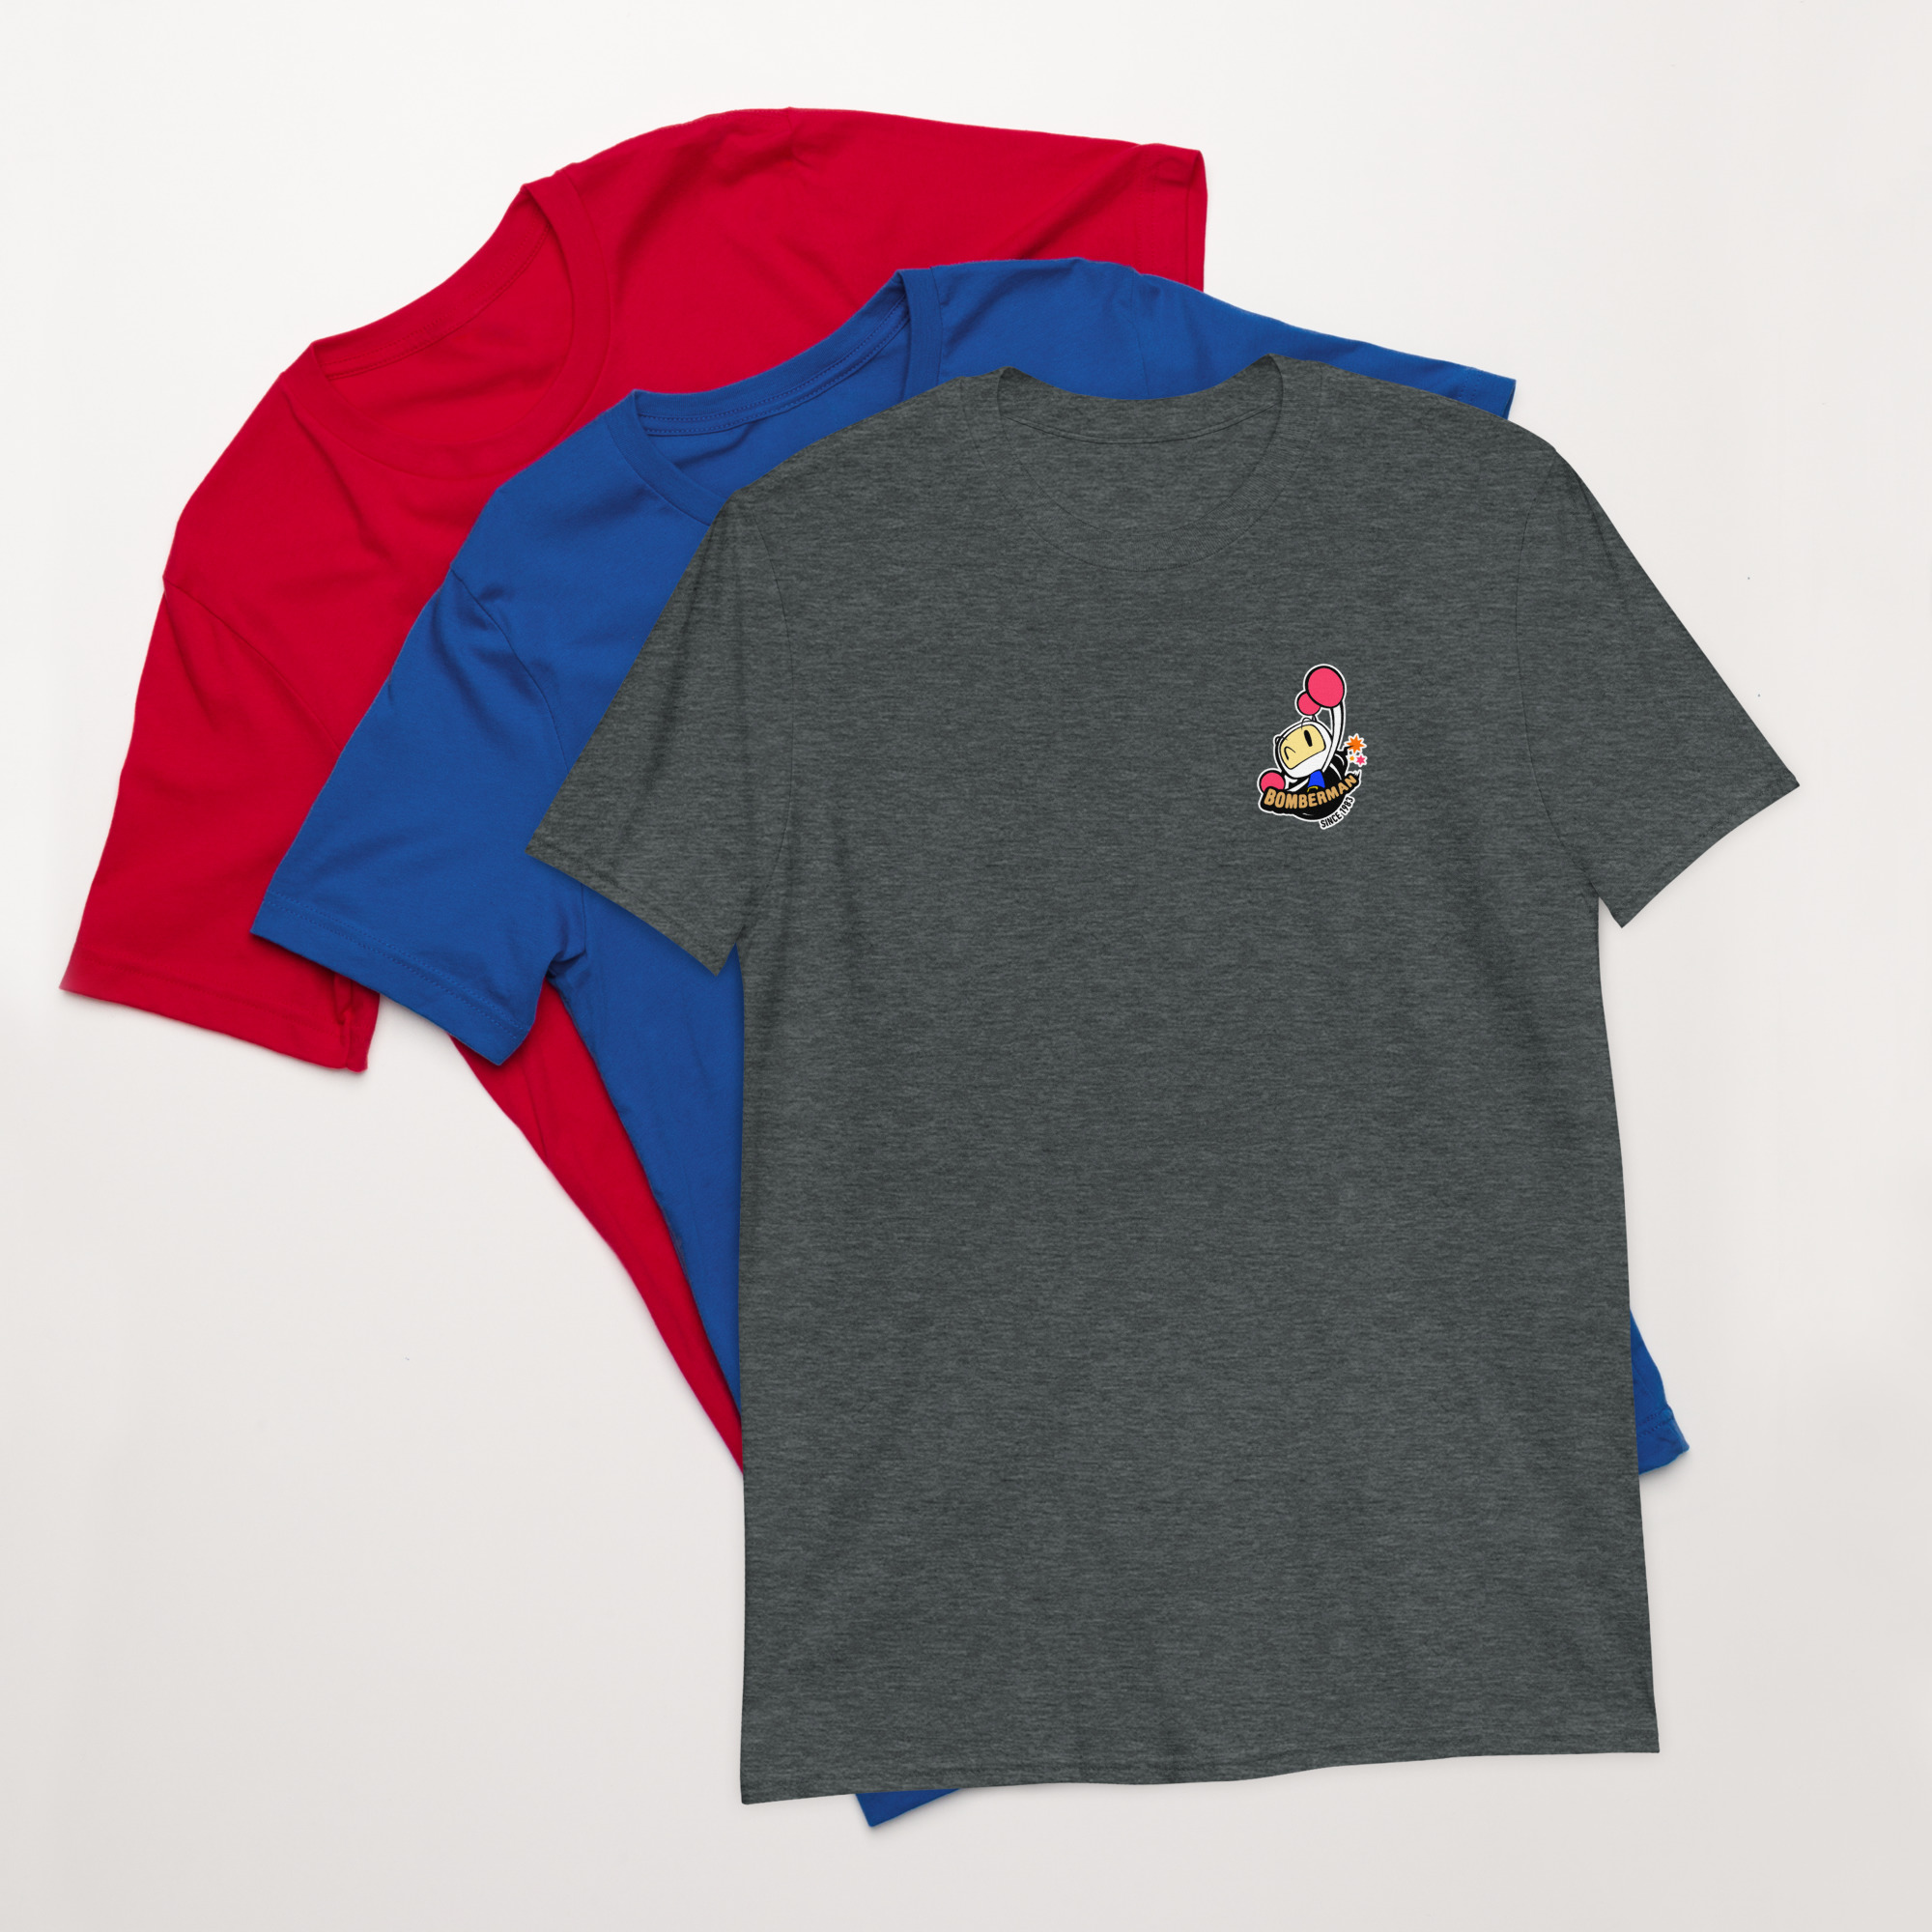 Camiseta  Bomberman - Frente e Verso